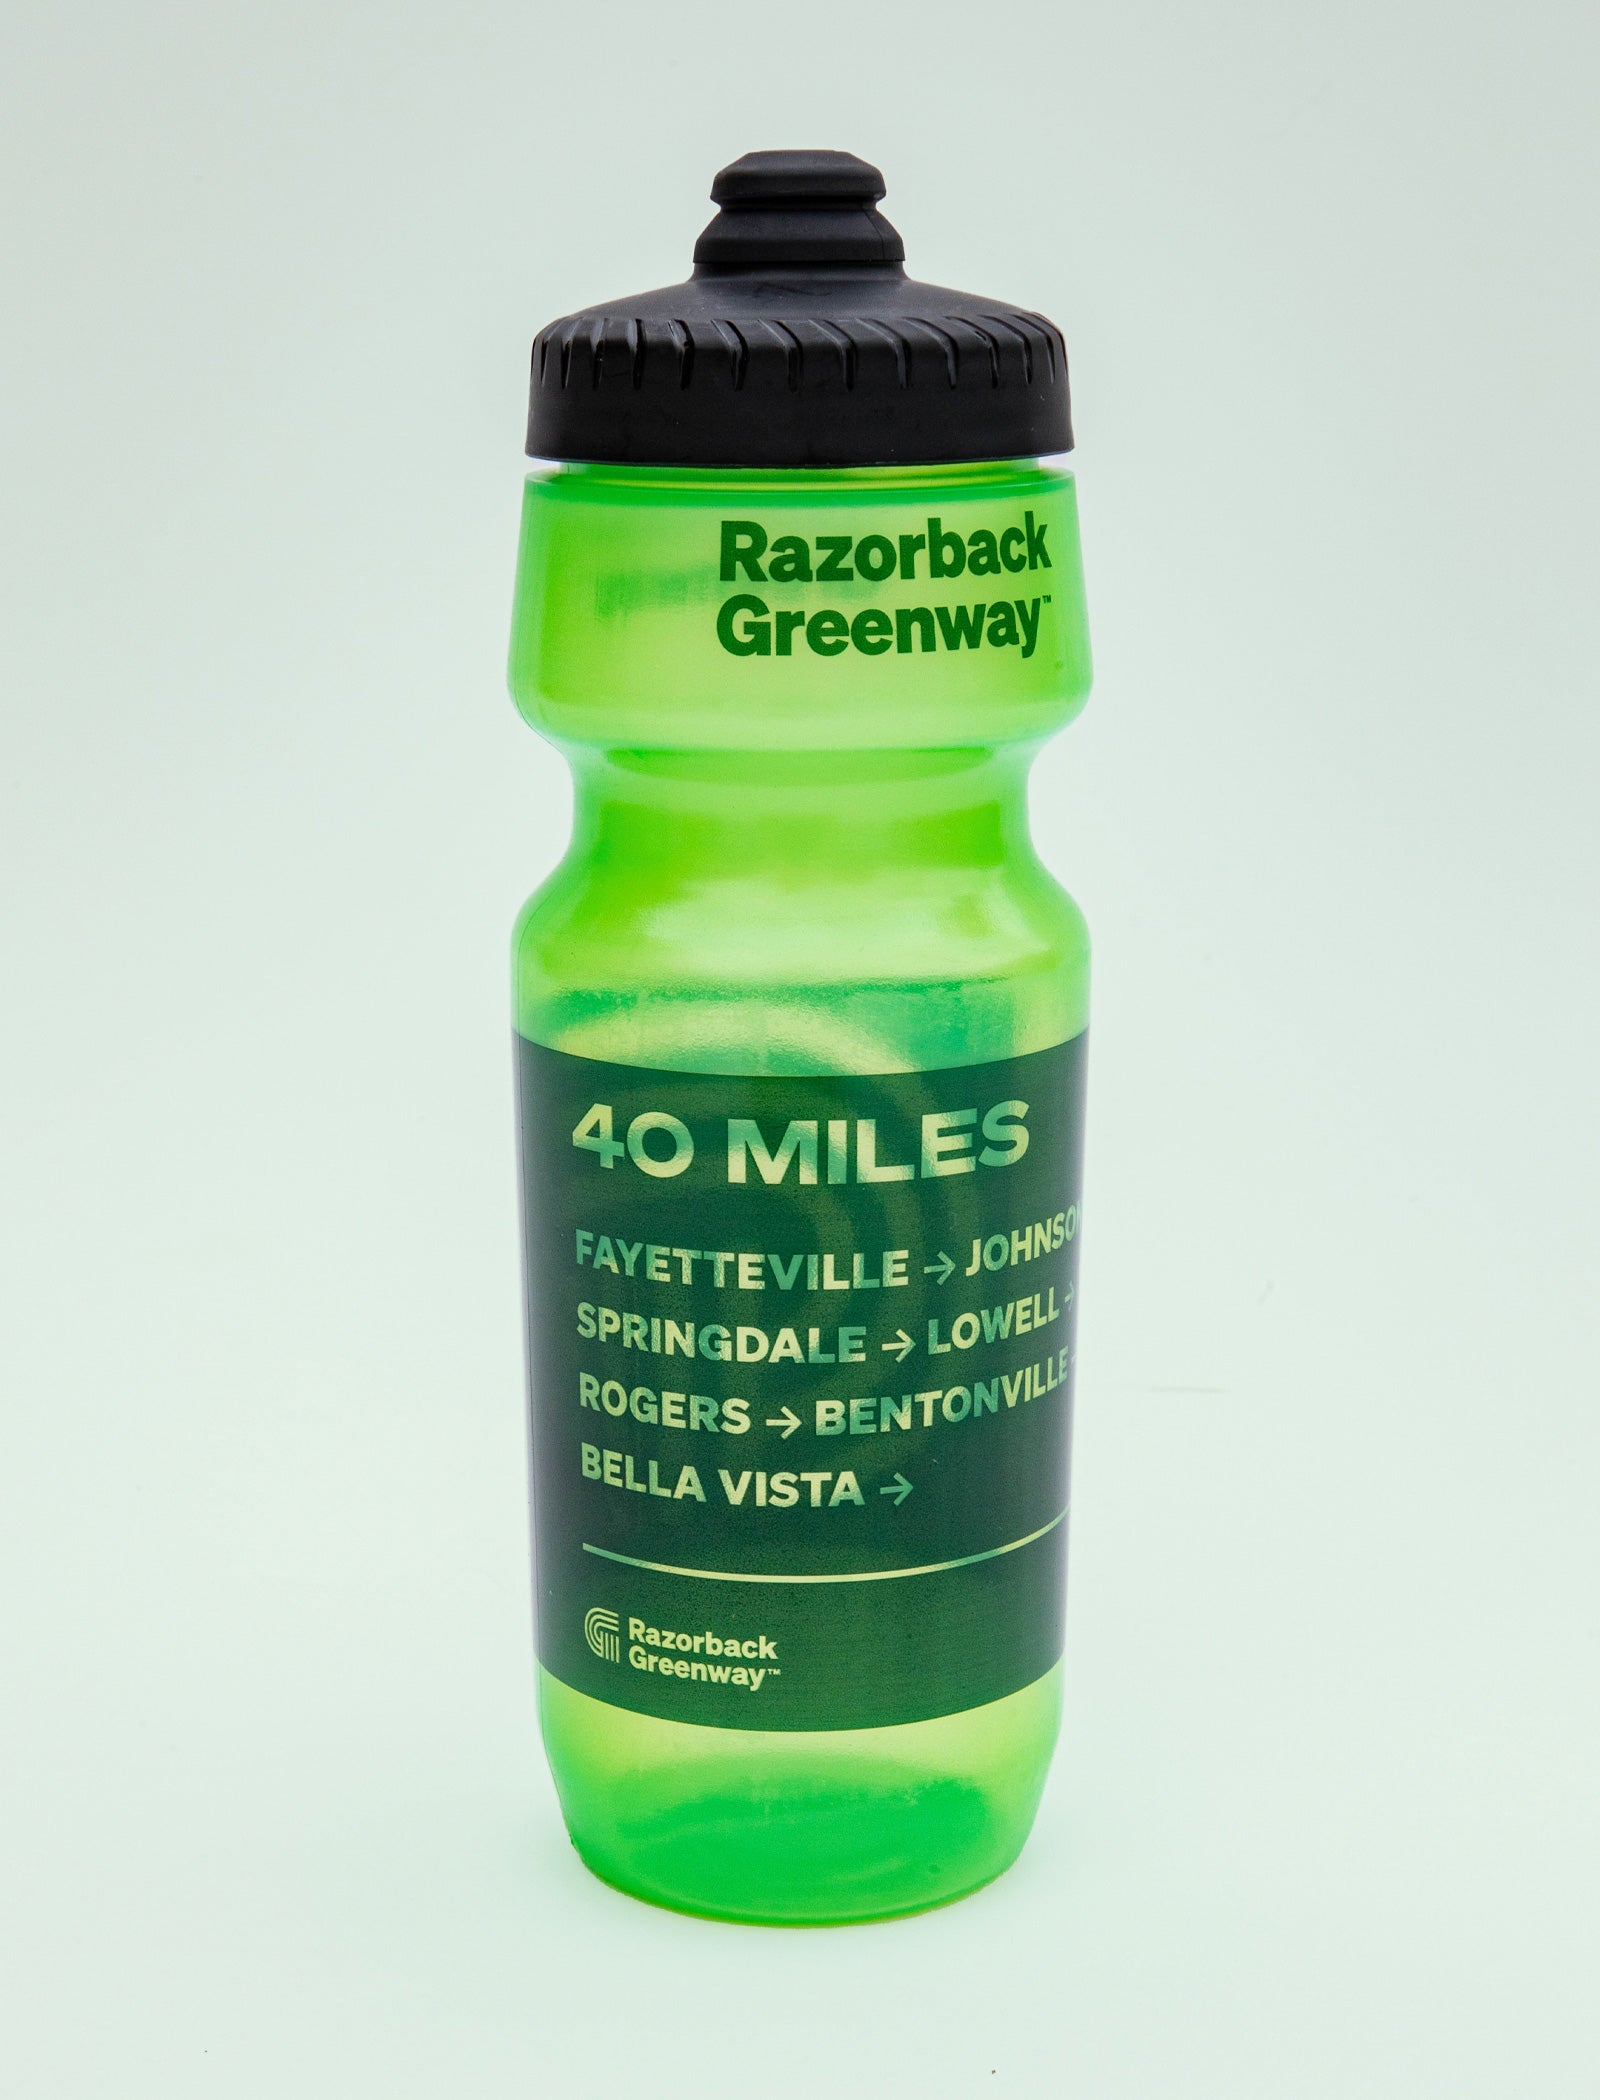 Razorback Greenway Specialized Bike Bottle